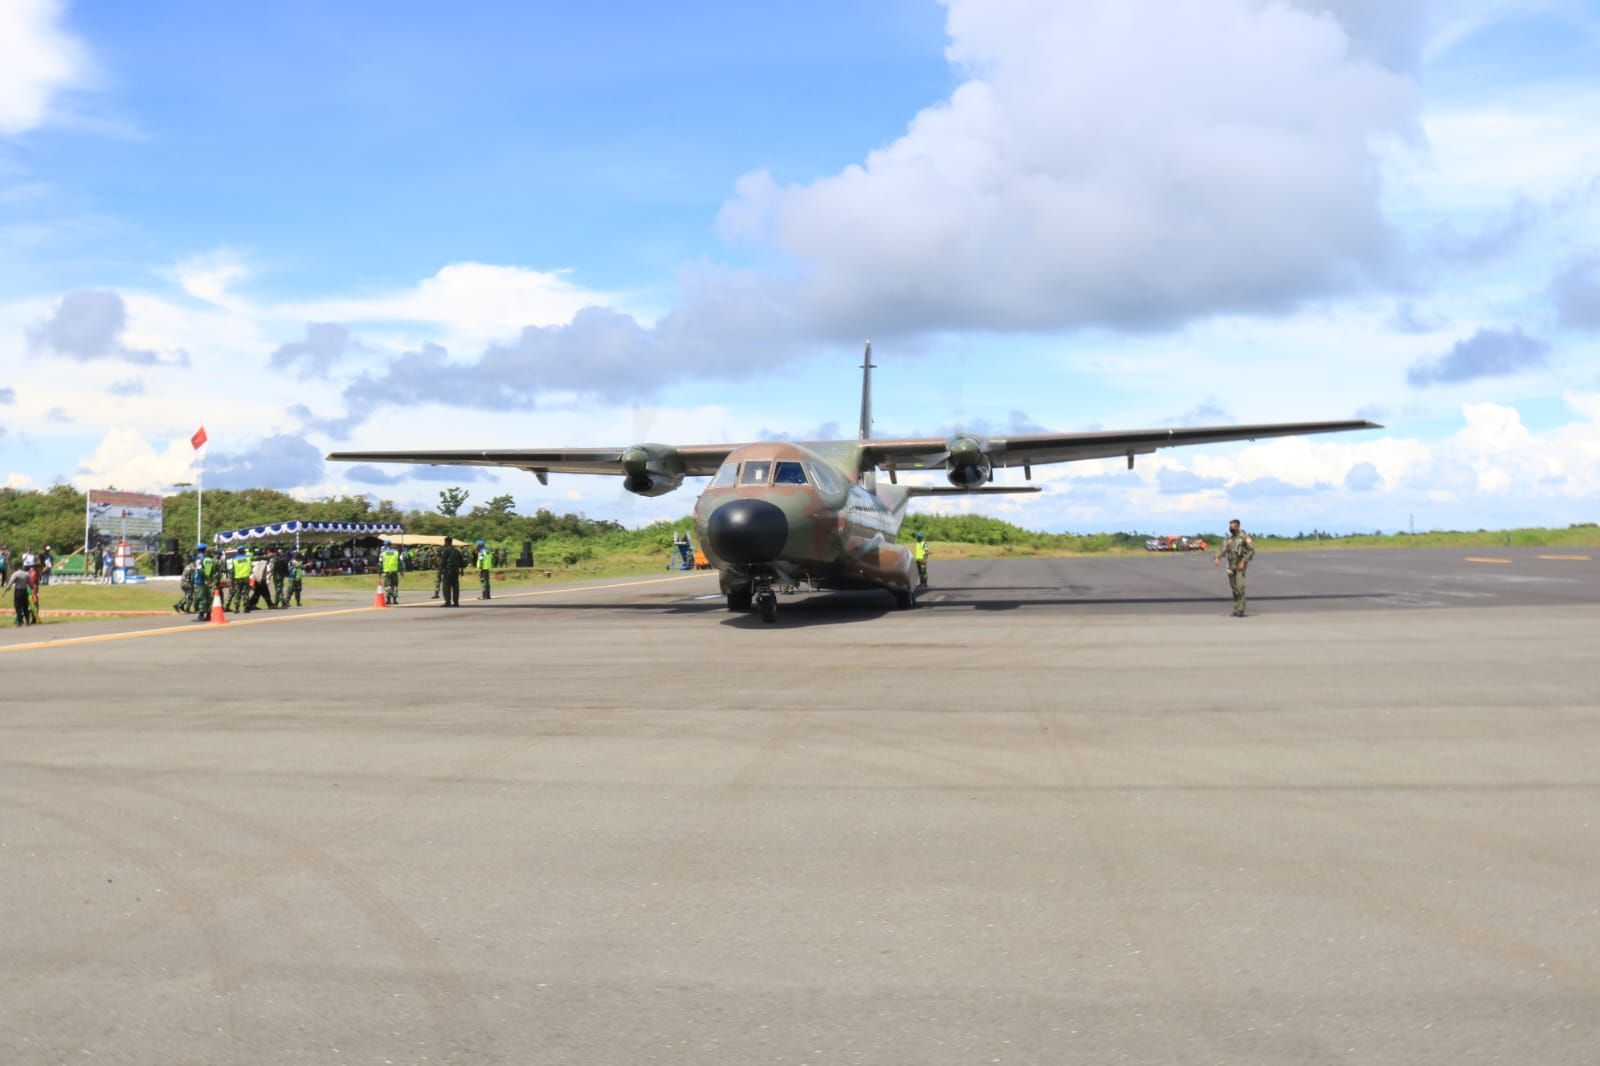 Pesawat TNI AU CN-235 Tergelincir di Bandara Wamena, Pilot dan Kru Selamat